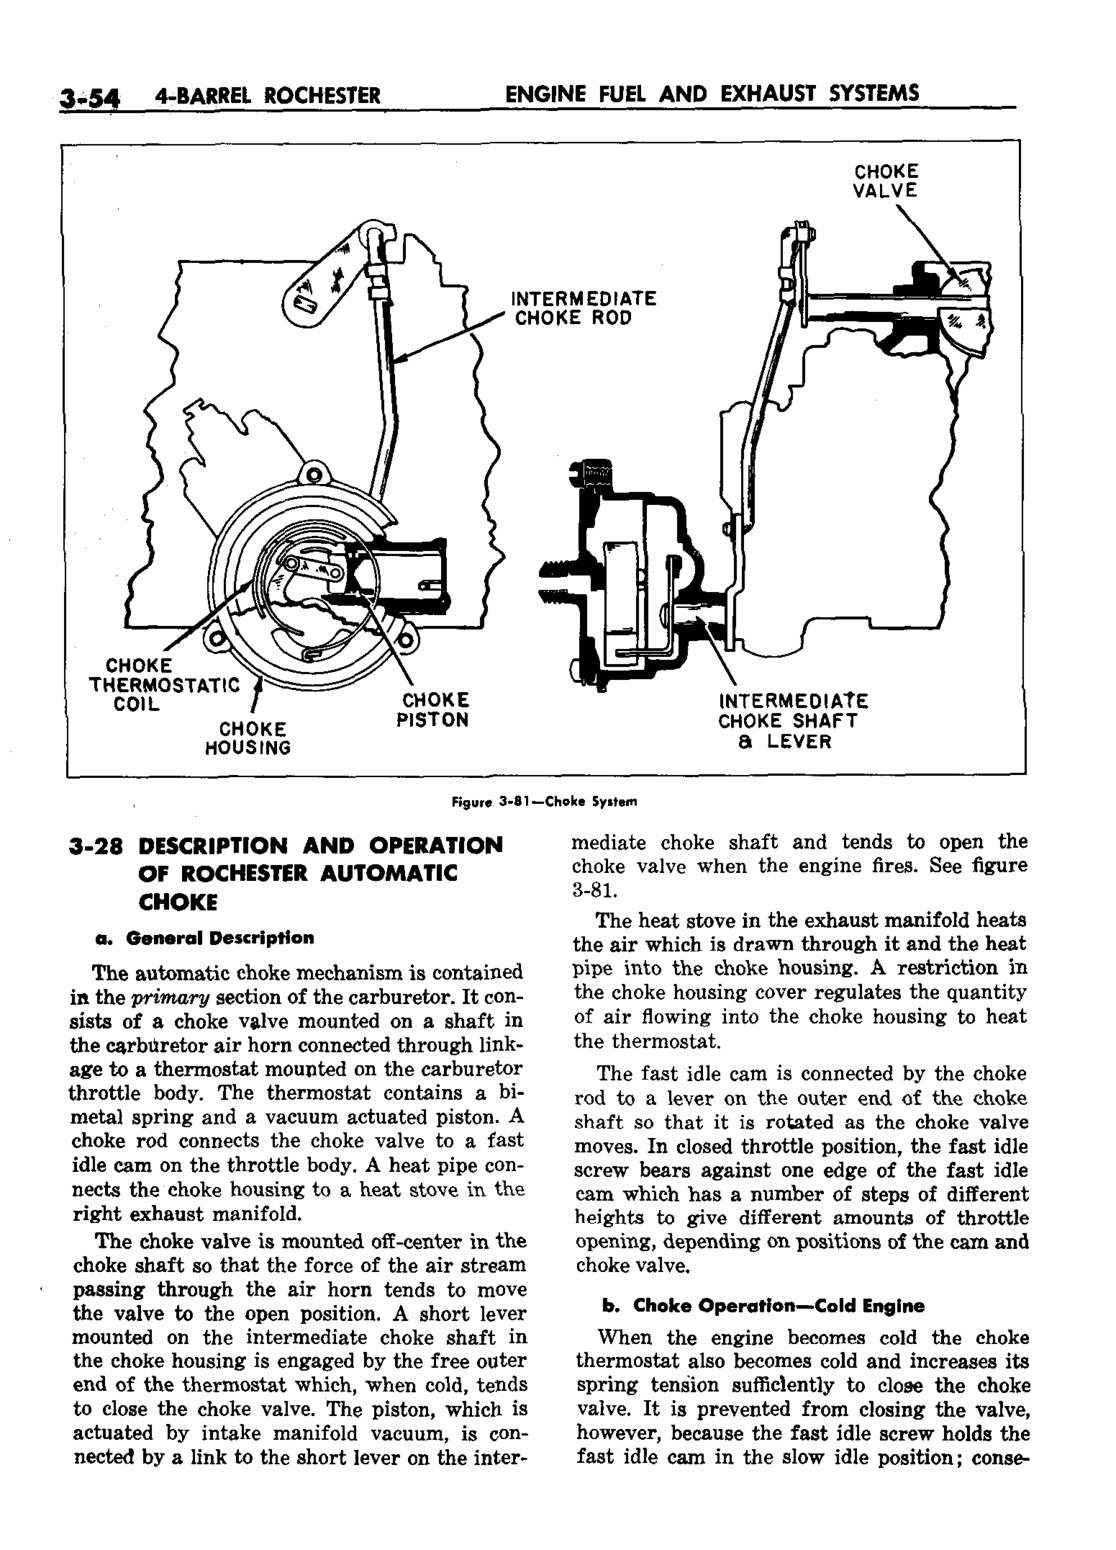 n_04 1959 Buick Shop Manual - Engine Fuel & Exhaust-054-054.jpg